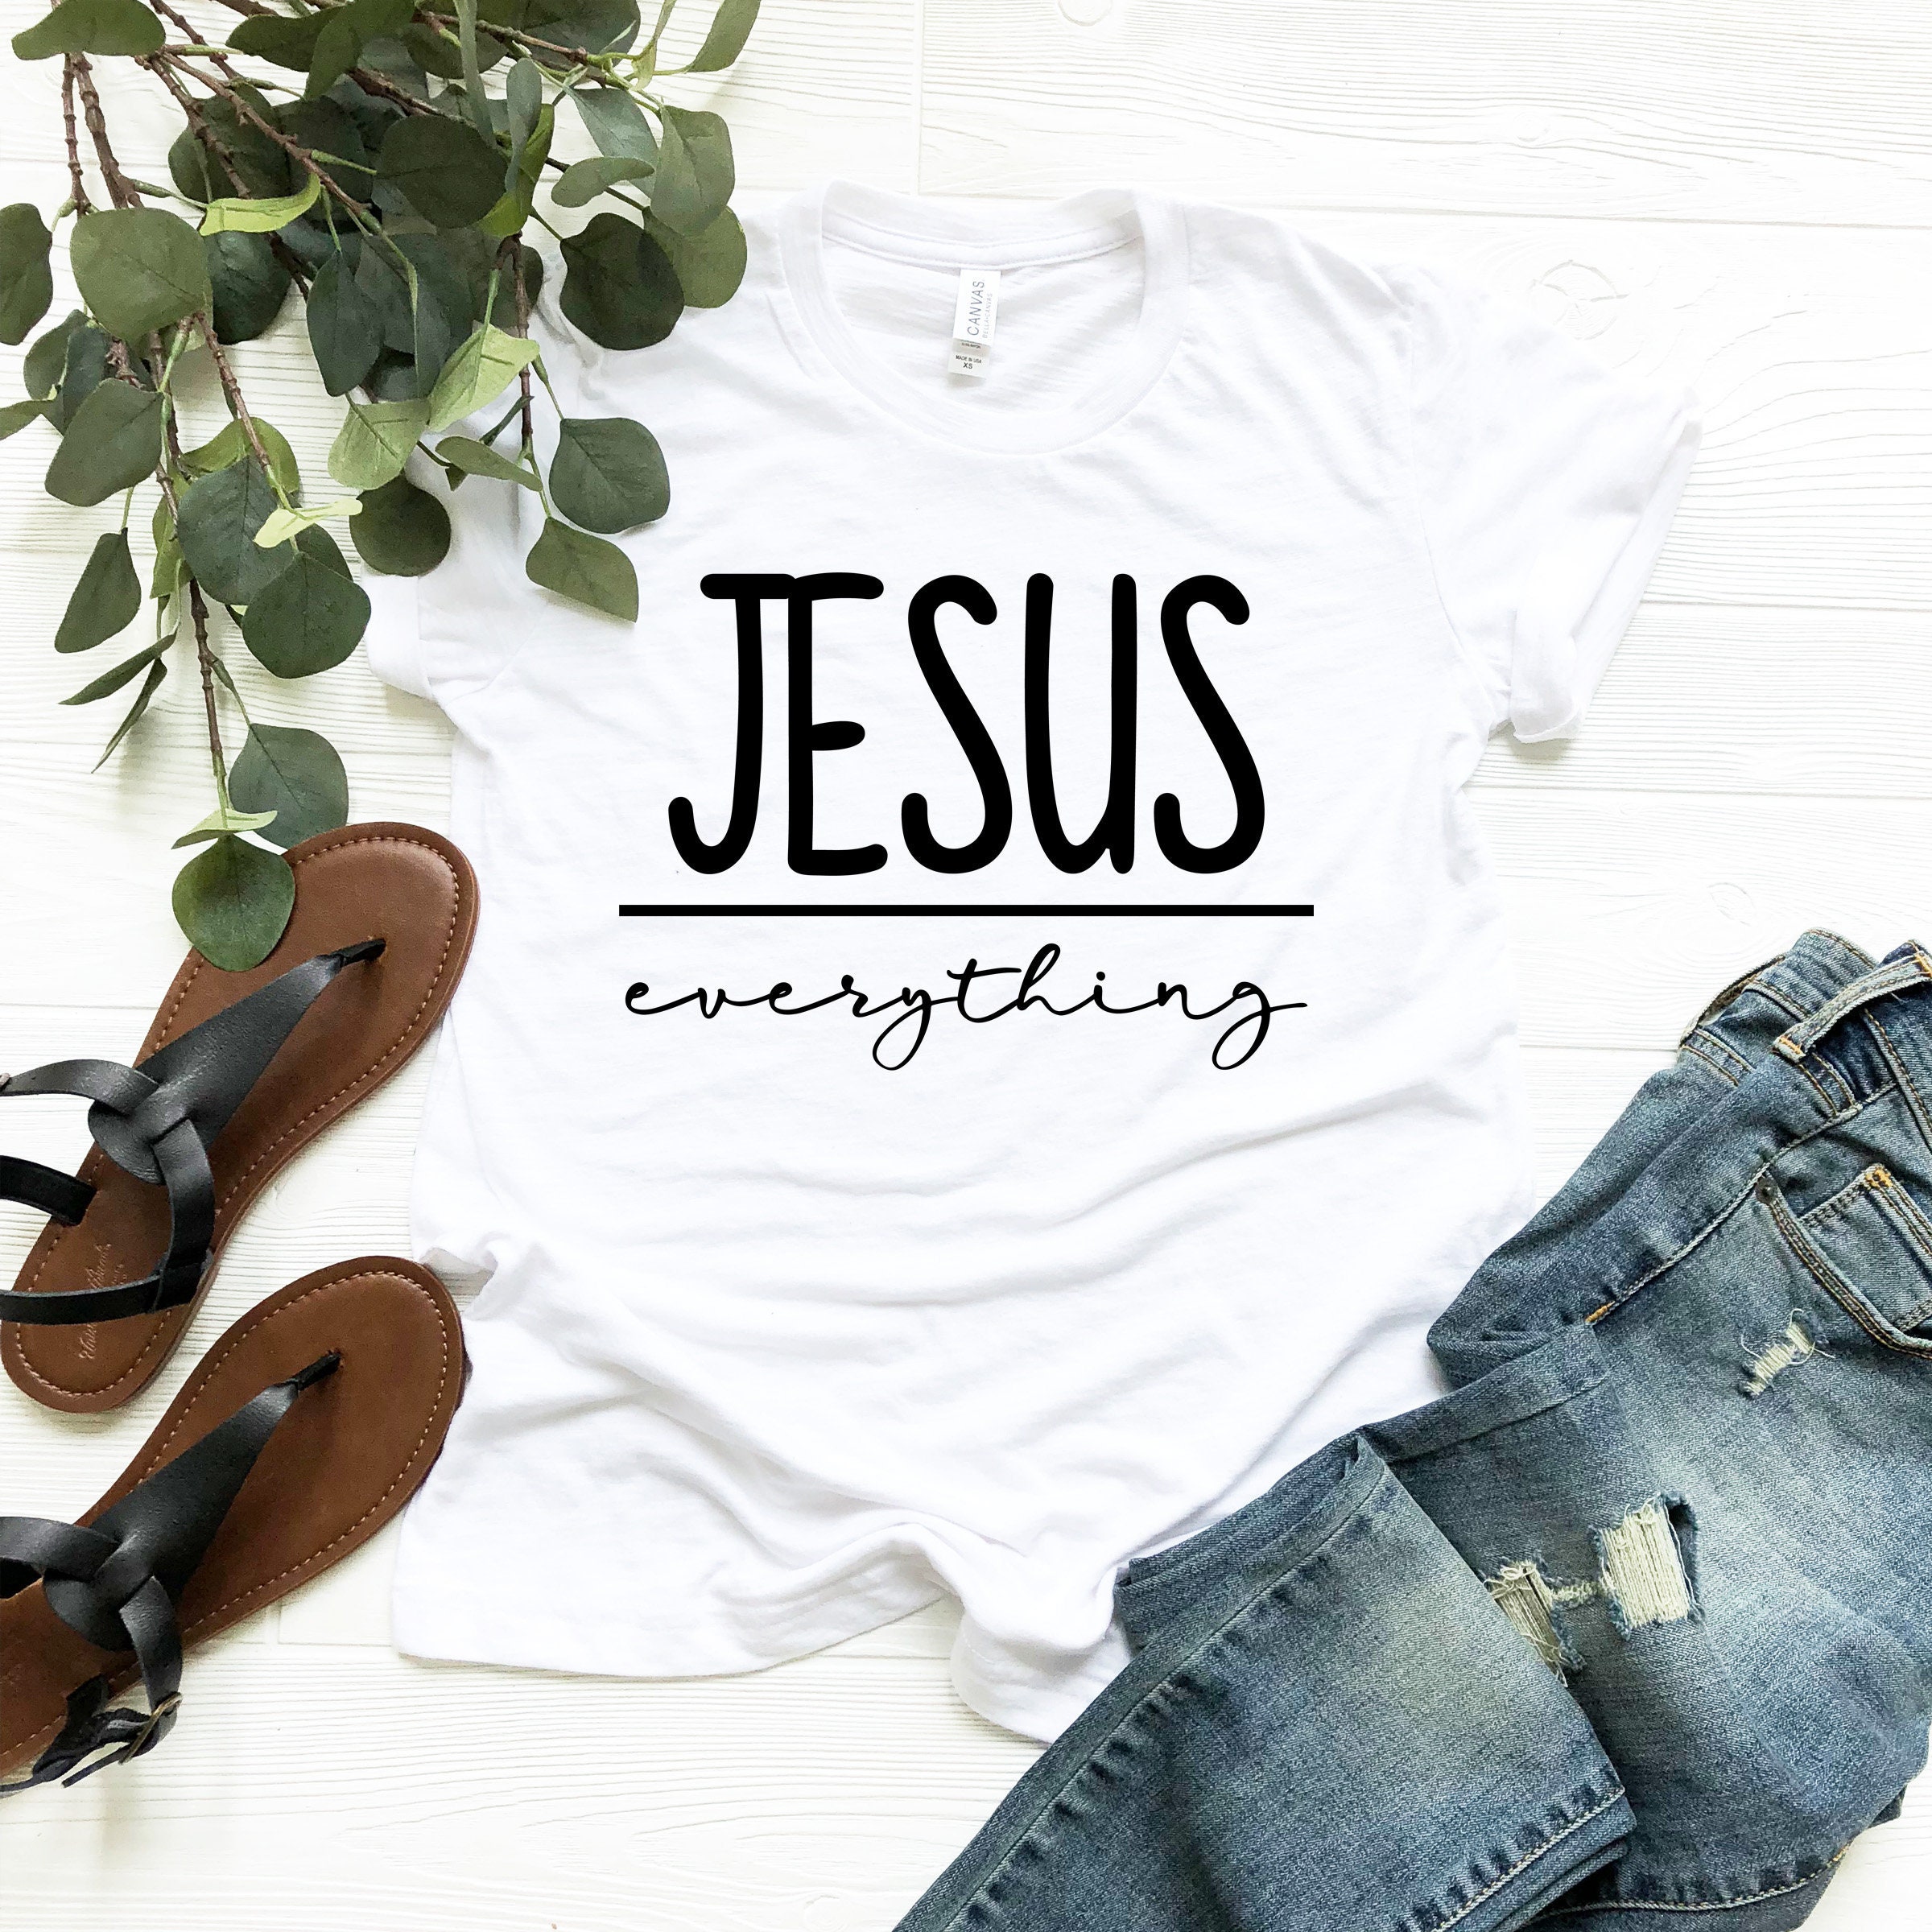 Jesus everything Shirt Jesus Shirt Jesus Clothing Tshirt | Etsy